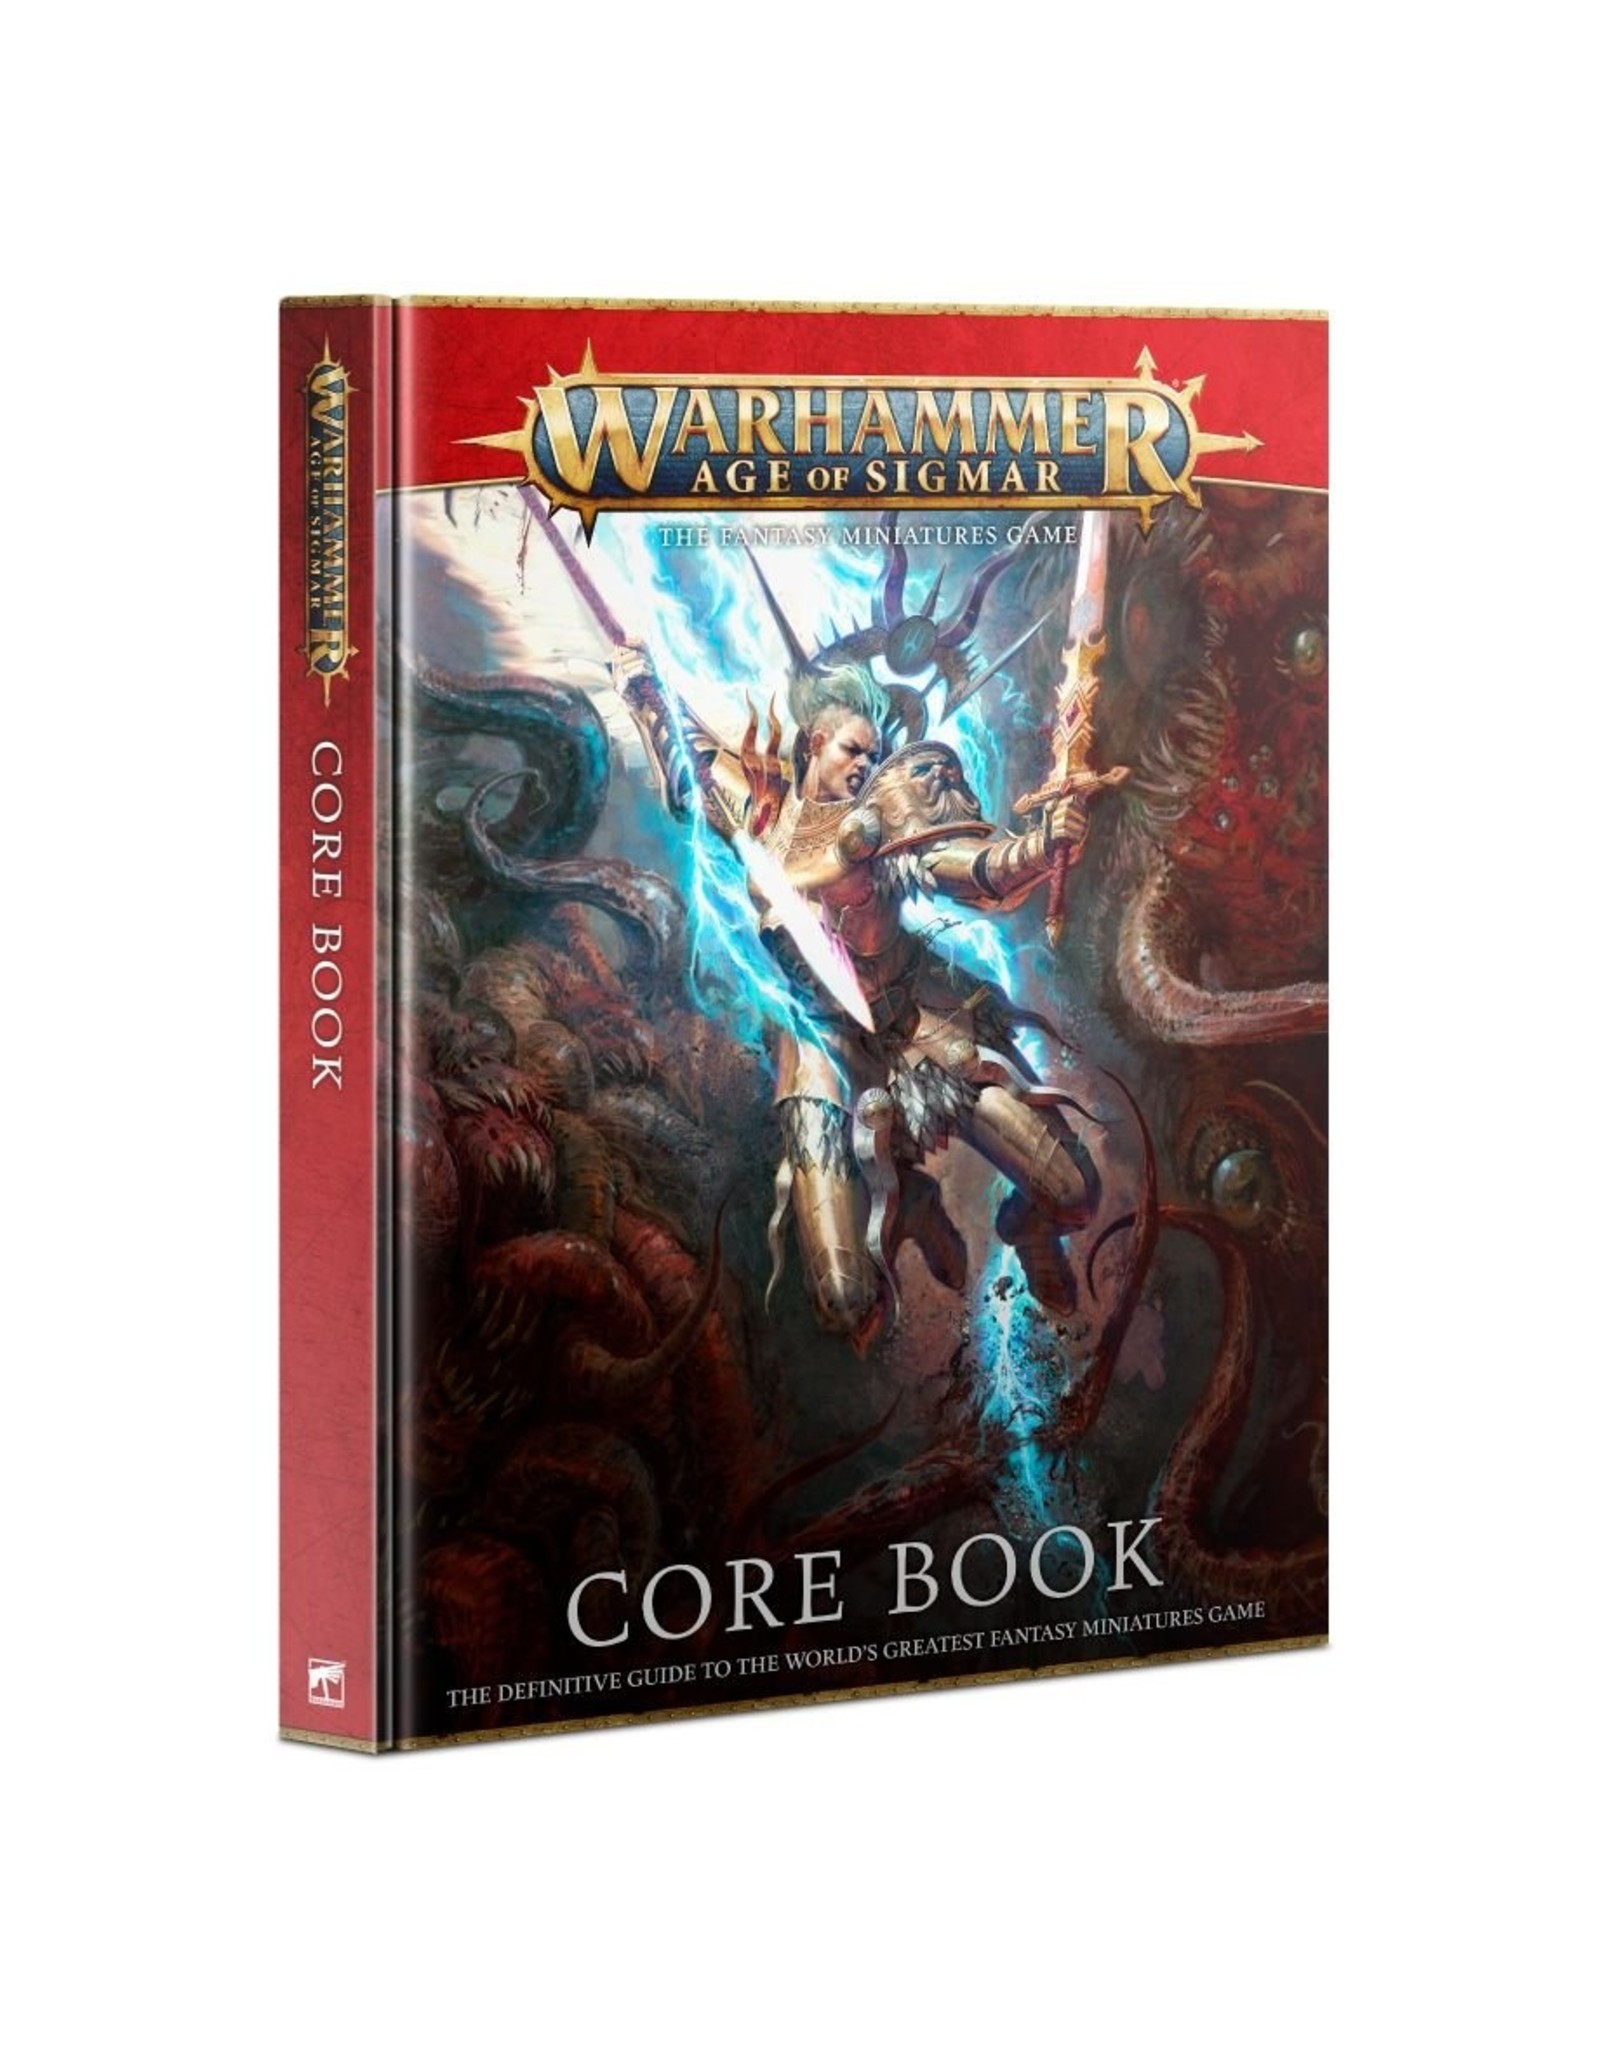 Games Workshop AoS | Core Book [Bk]